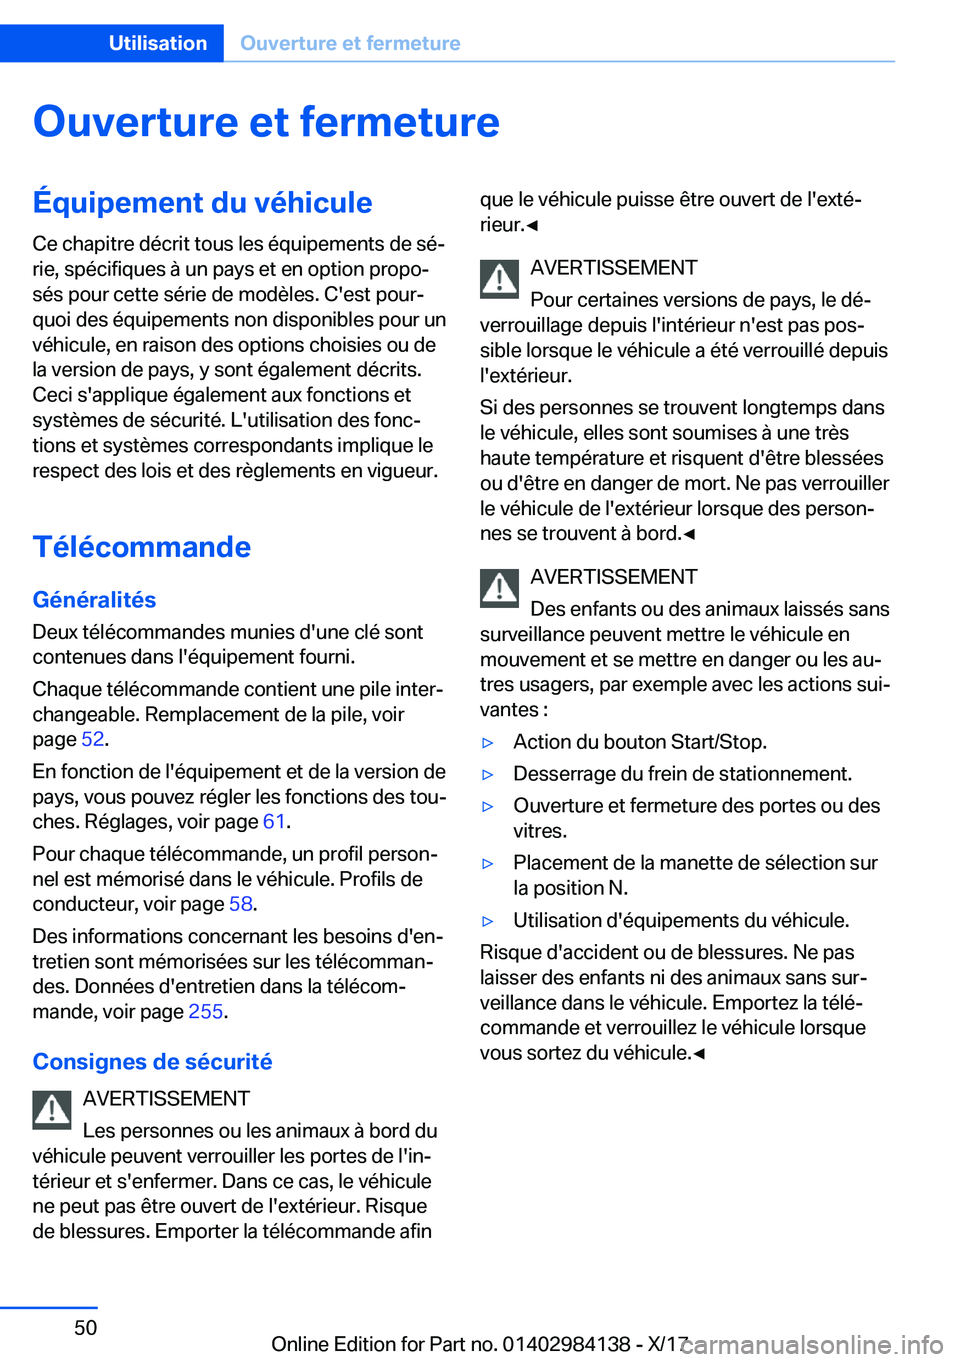 BMW 2 SERIES COUPE 2018  Notices Demploi (in French) �O�u�v�e�r�t�u�r�e��e�t��f�e�r�m�e�t�u�r�e�